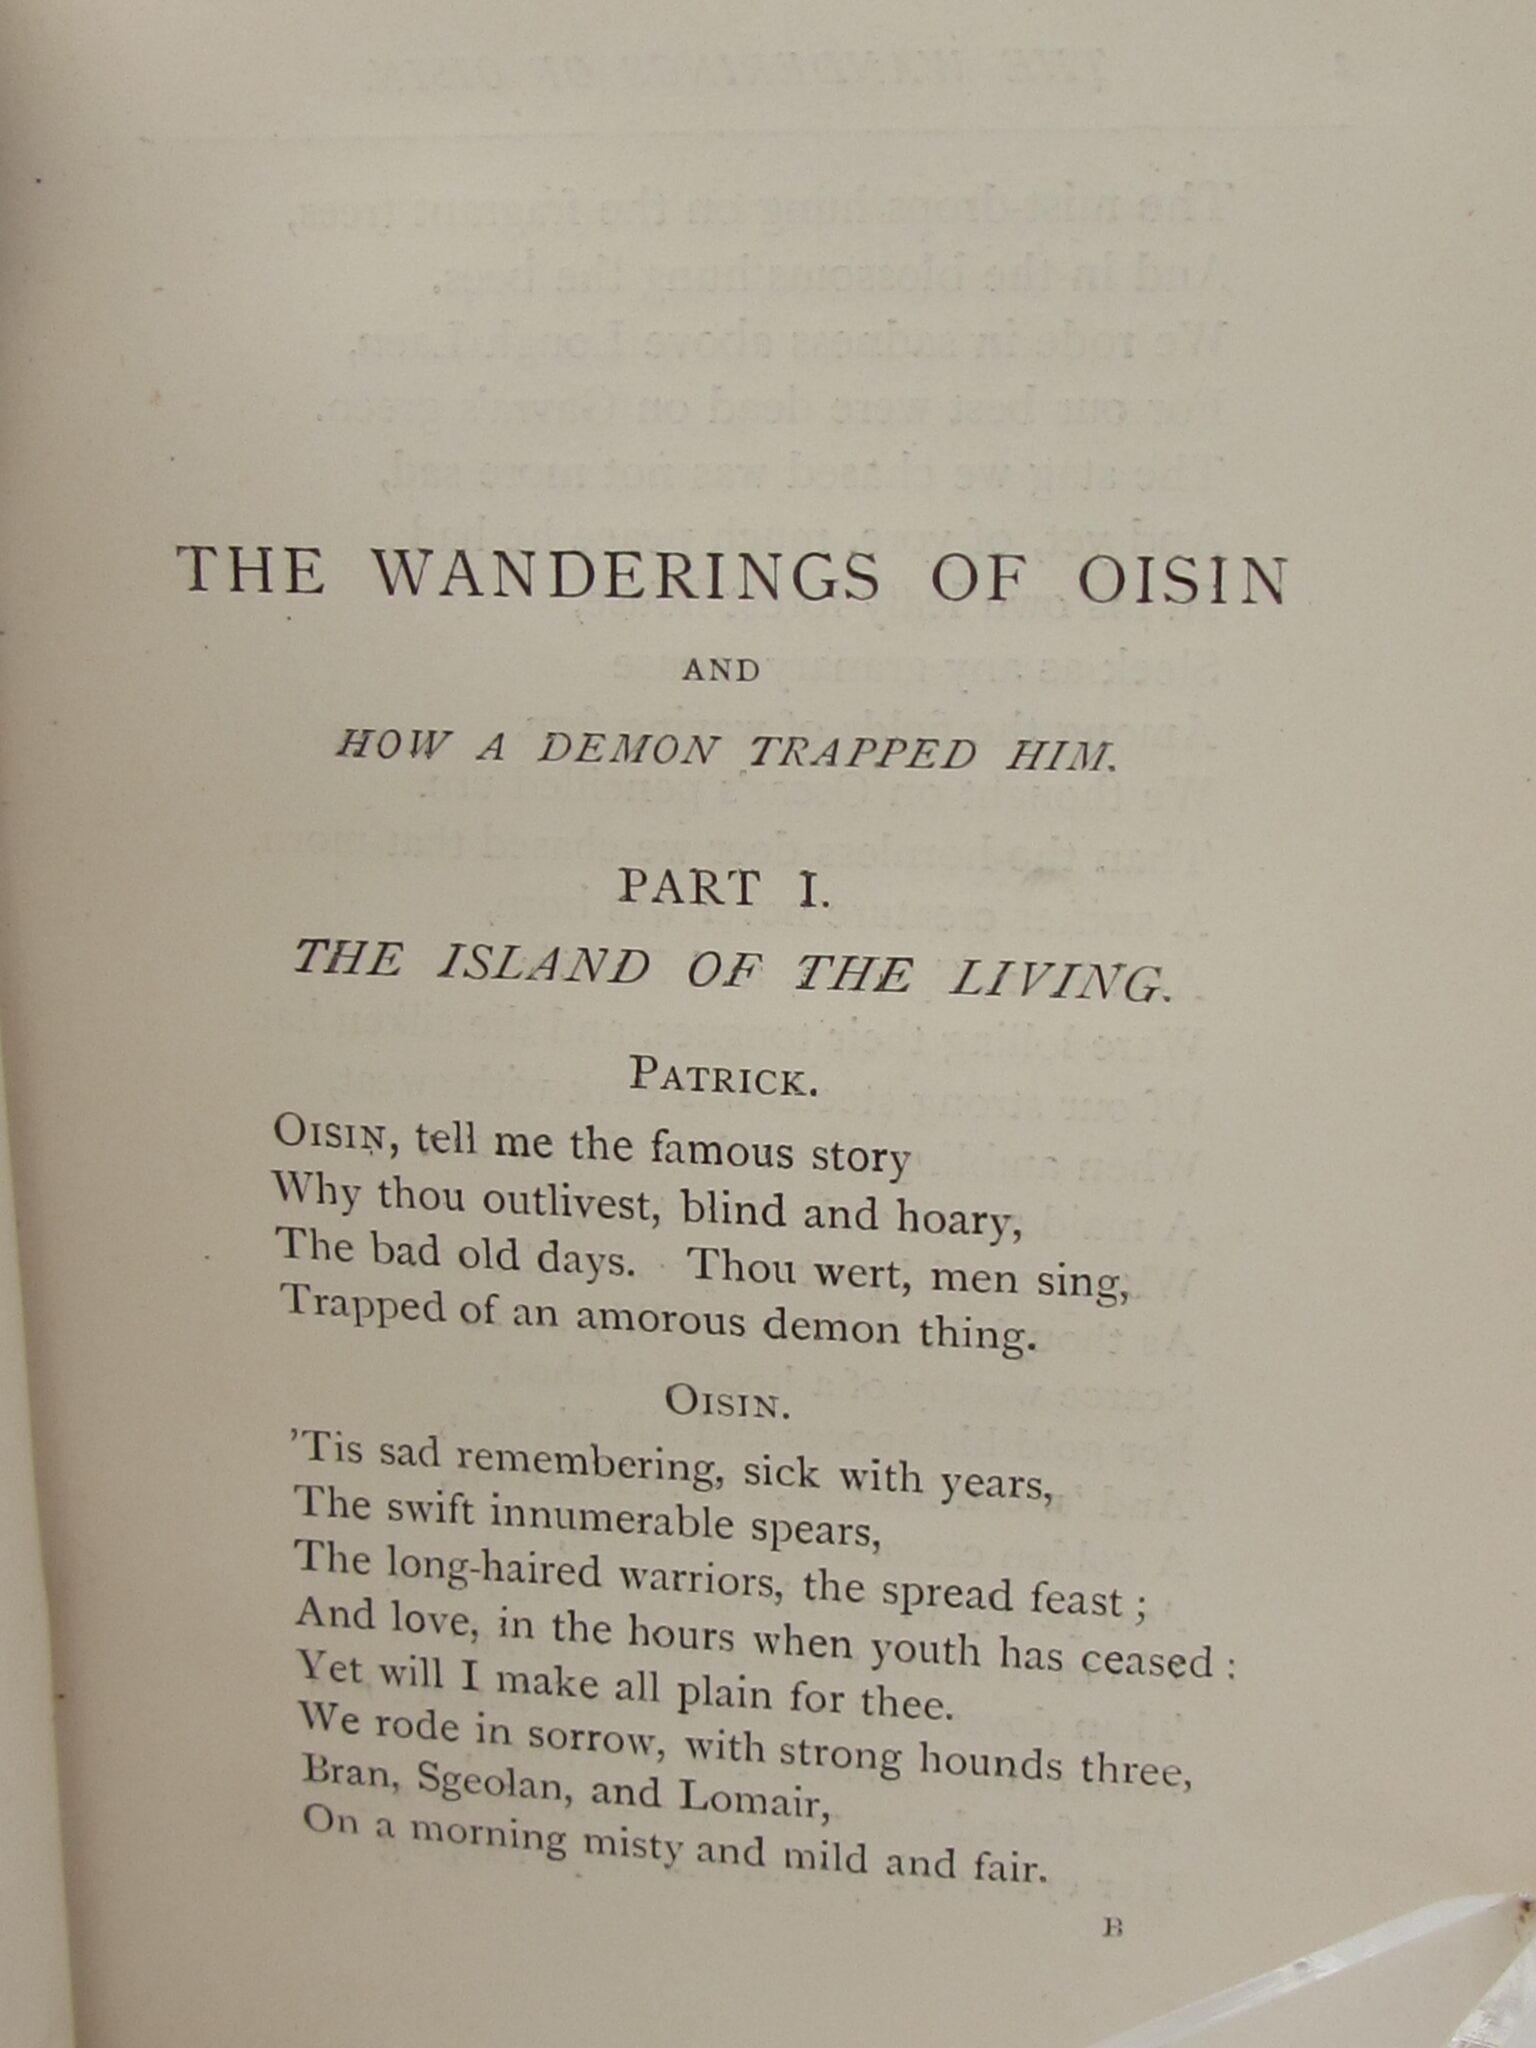 the wanderings of oisin book 3